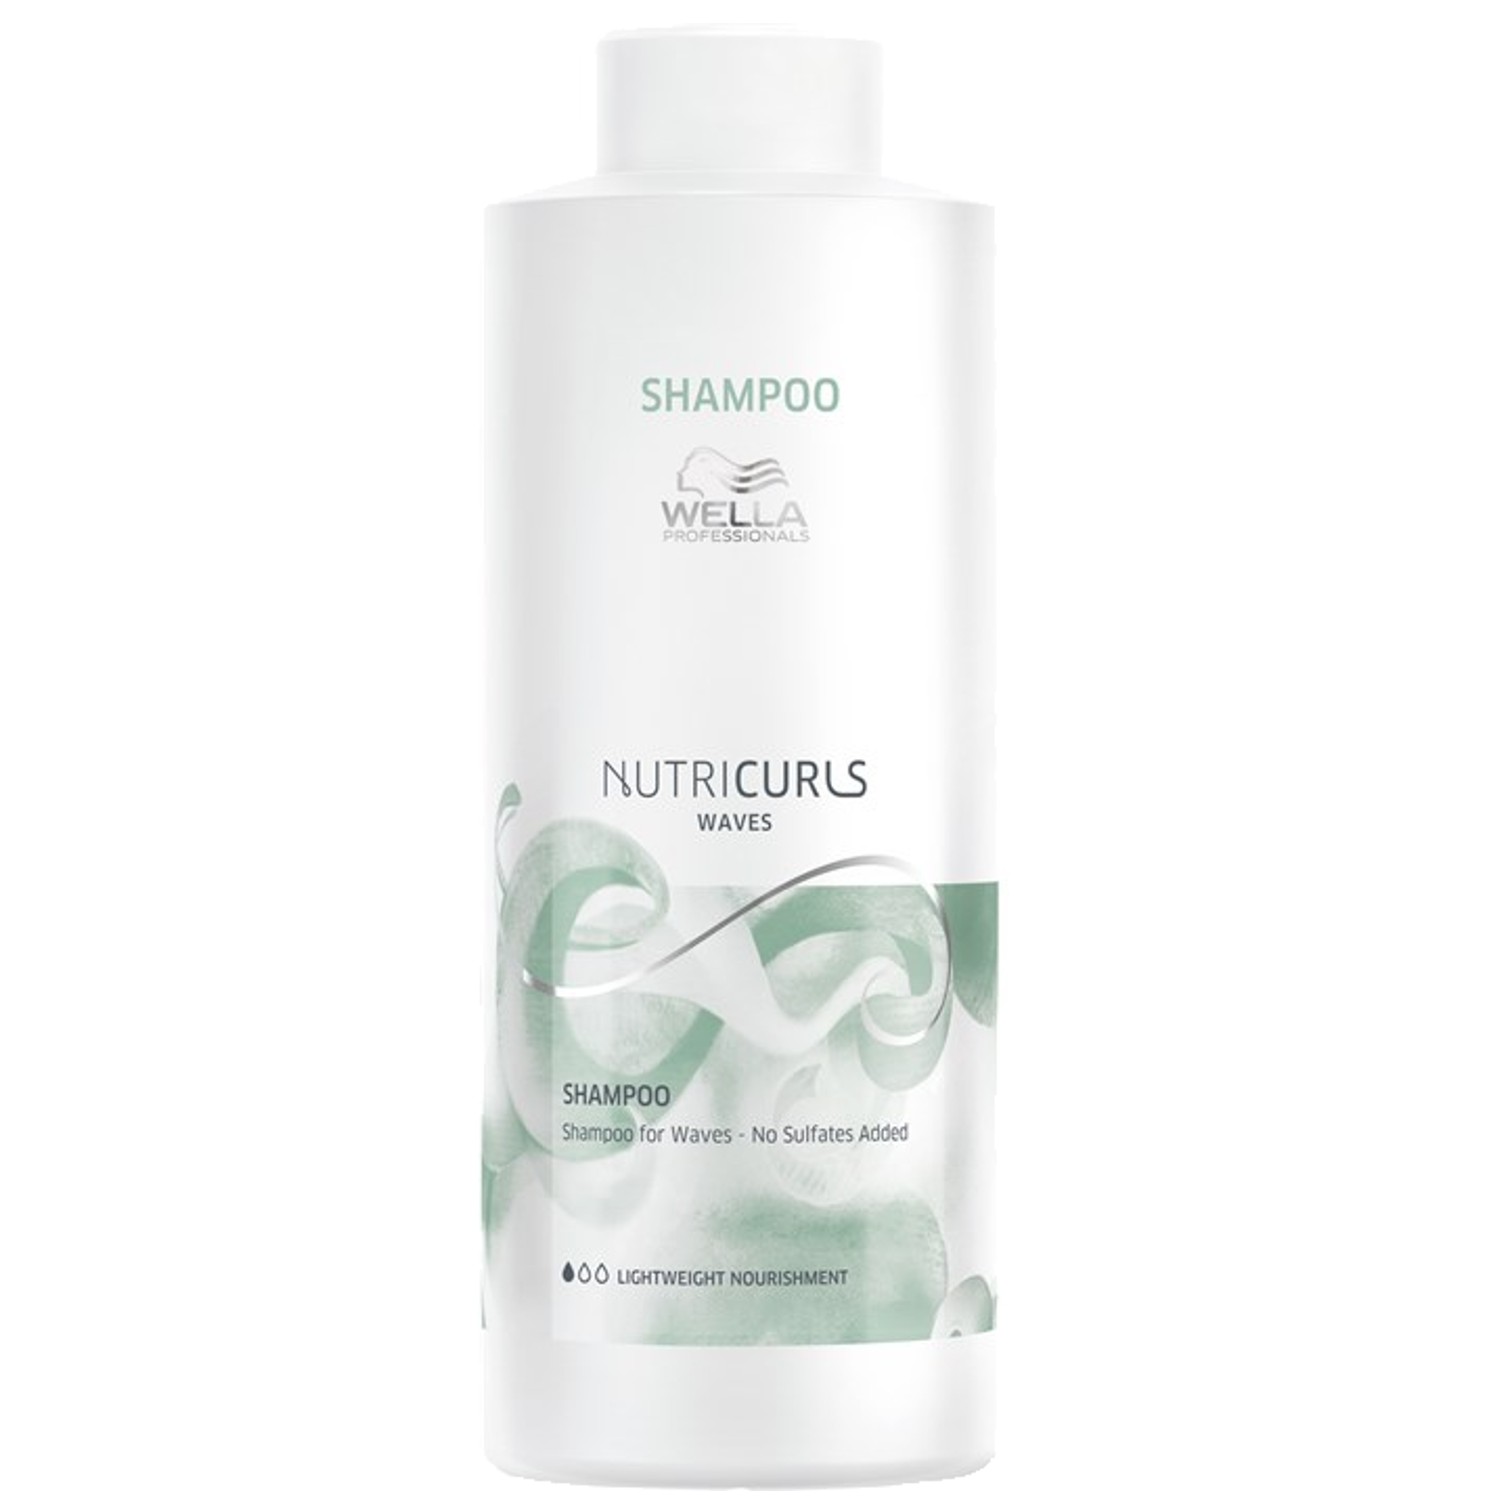 WELLA NUTRICURLS Shampoo Waves 1 L